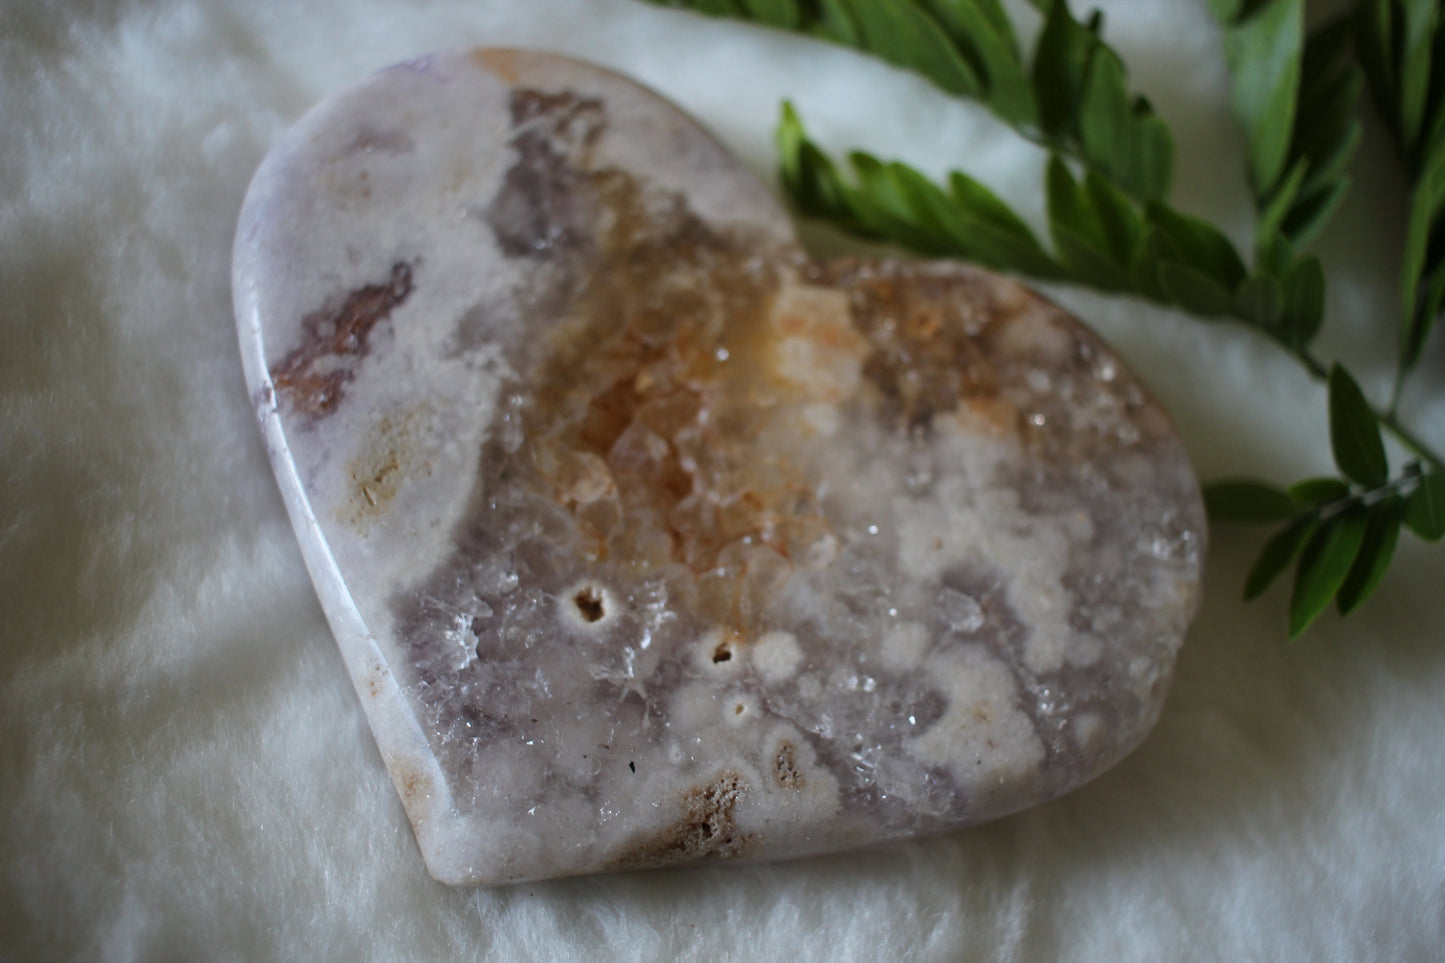 Extra Large Crystal Heart | PINK AMETHYST QUARTZ Heart | Healing Yogo Meditation Crystals for Love Stress Free